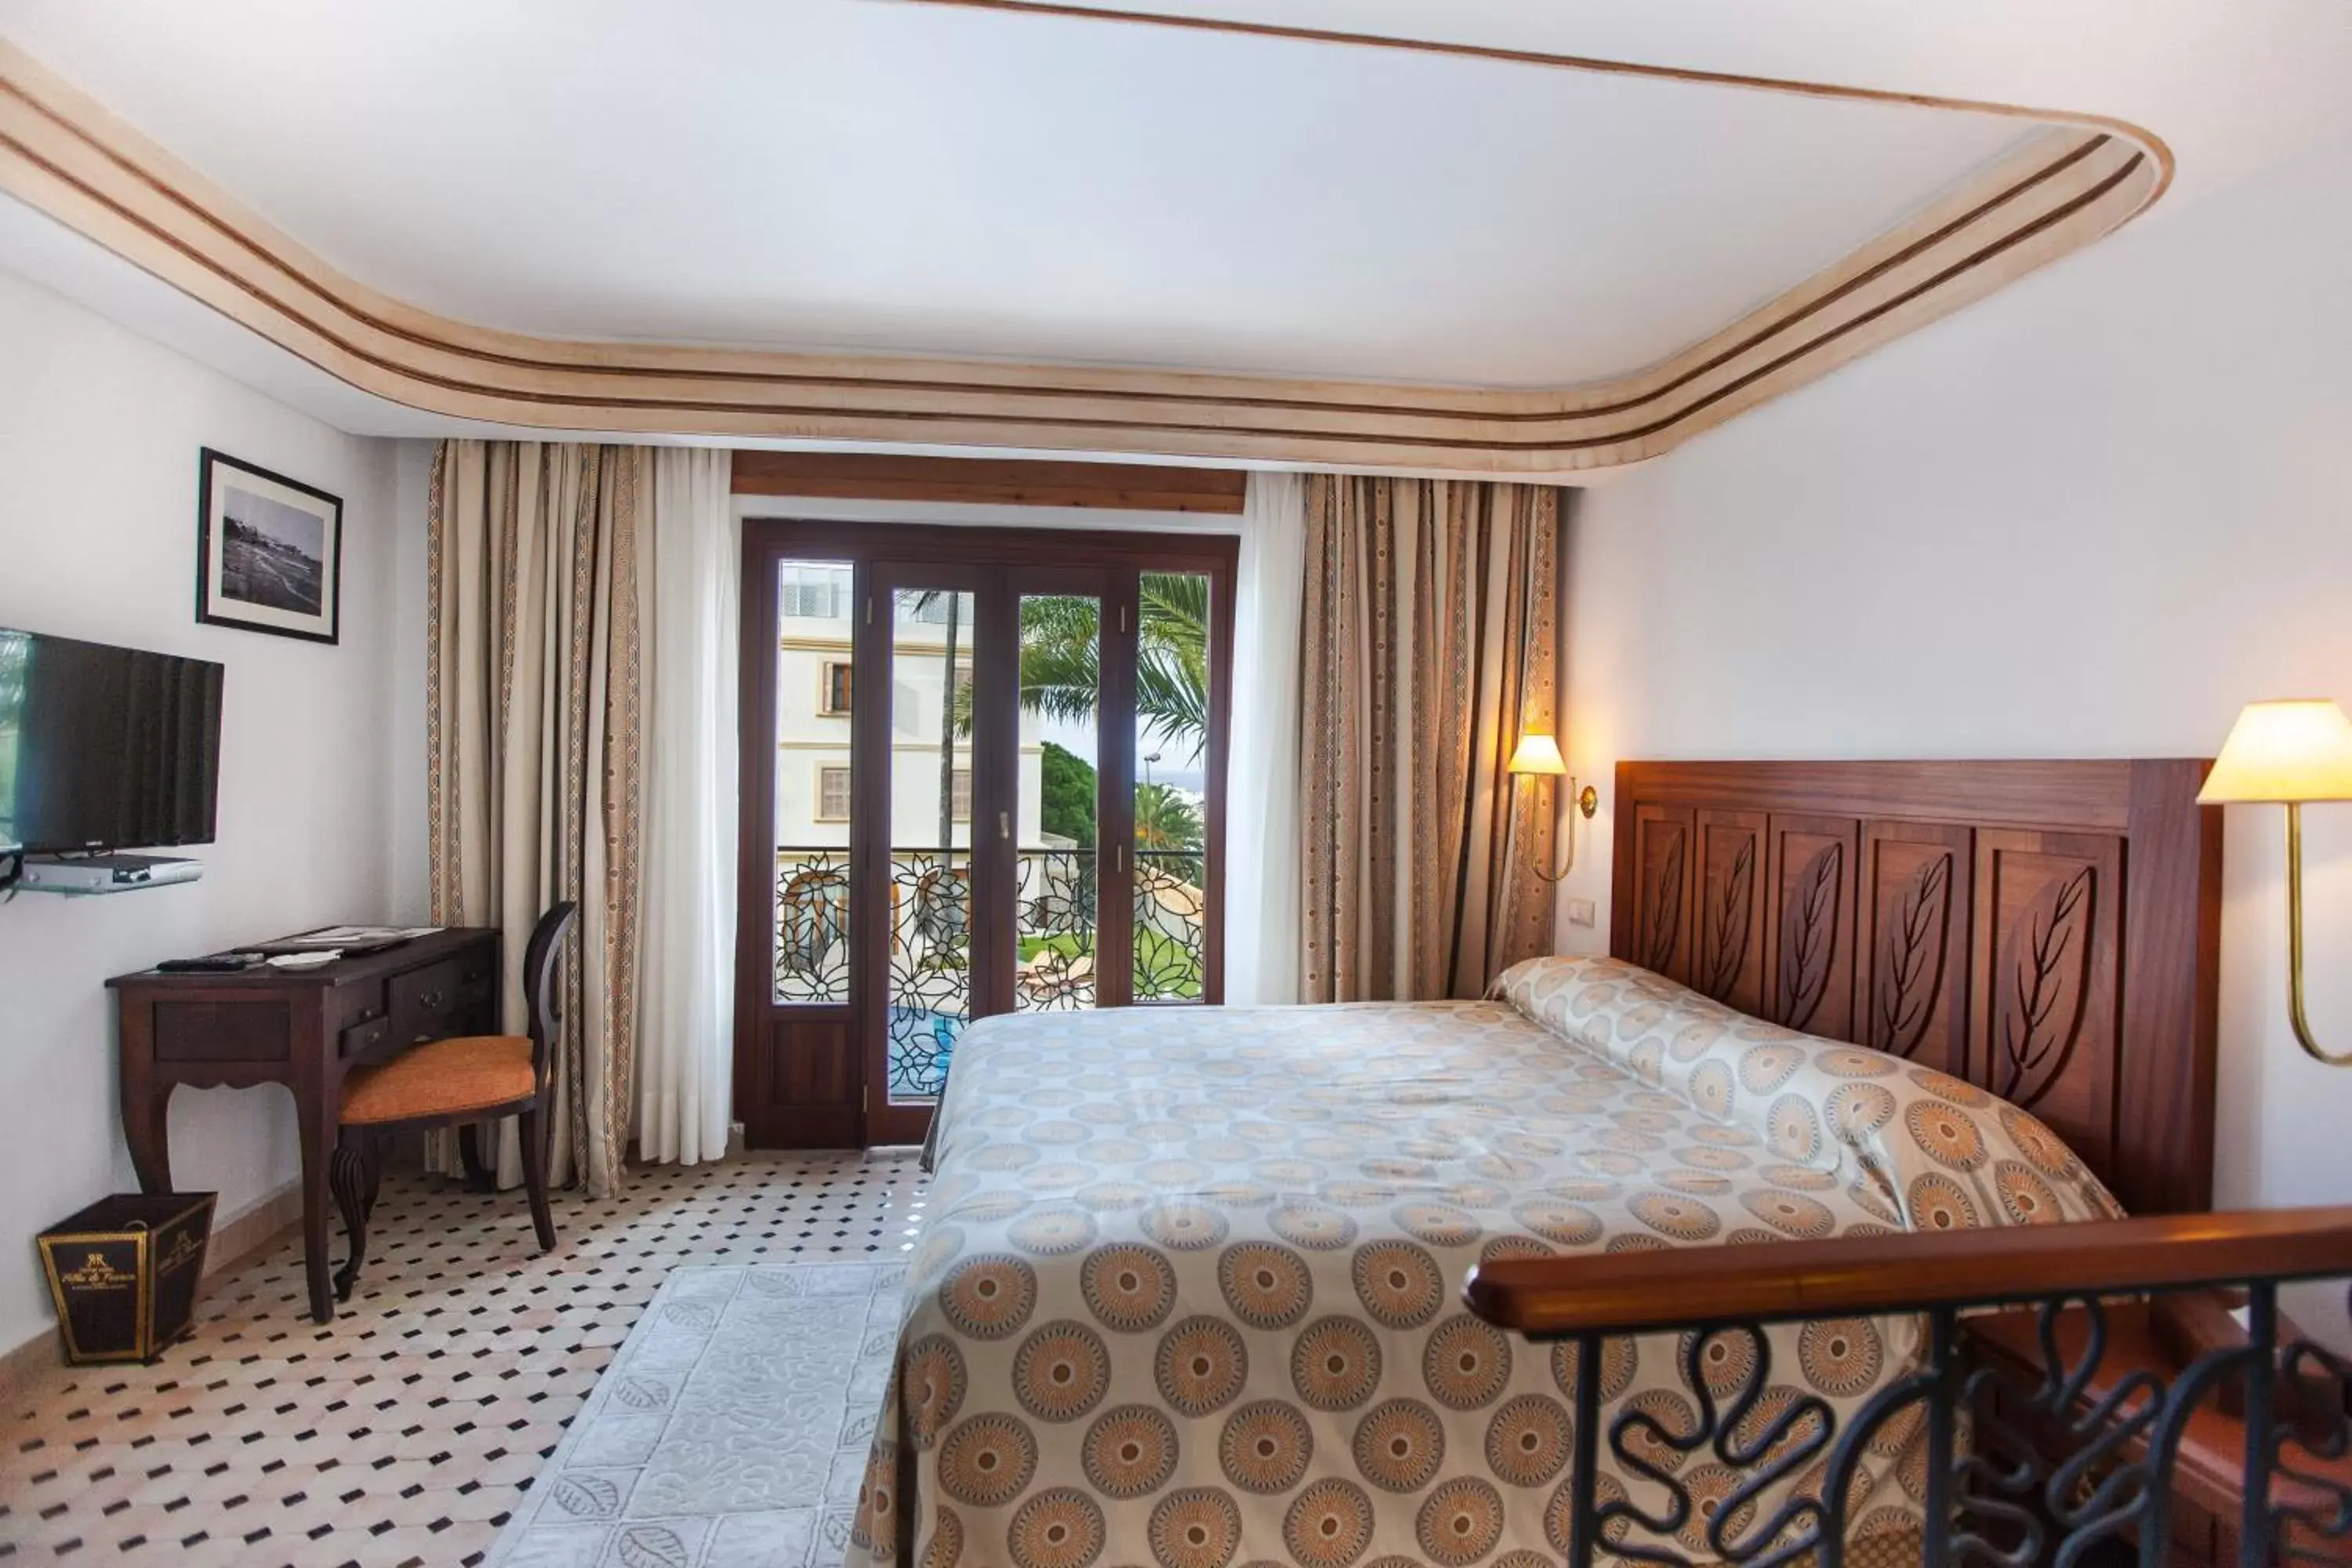 Bed, Room Photo in Grand Hotel Villa de France